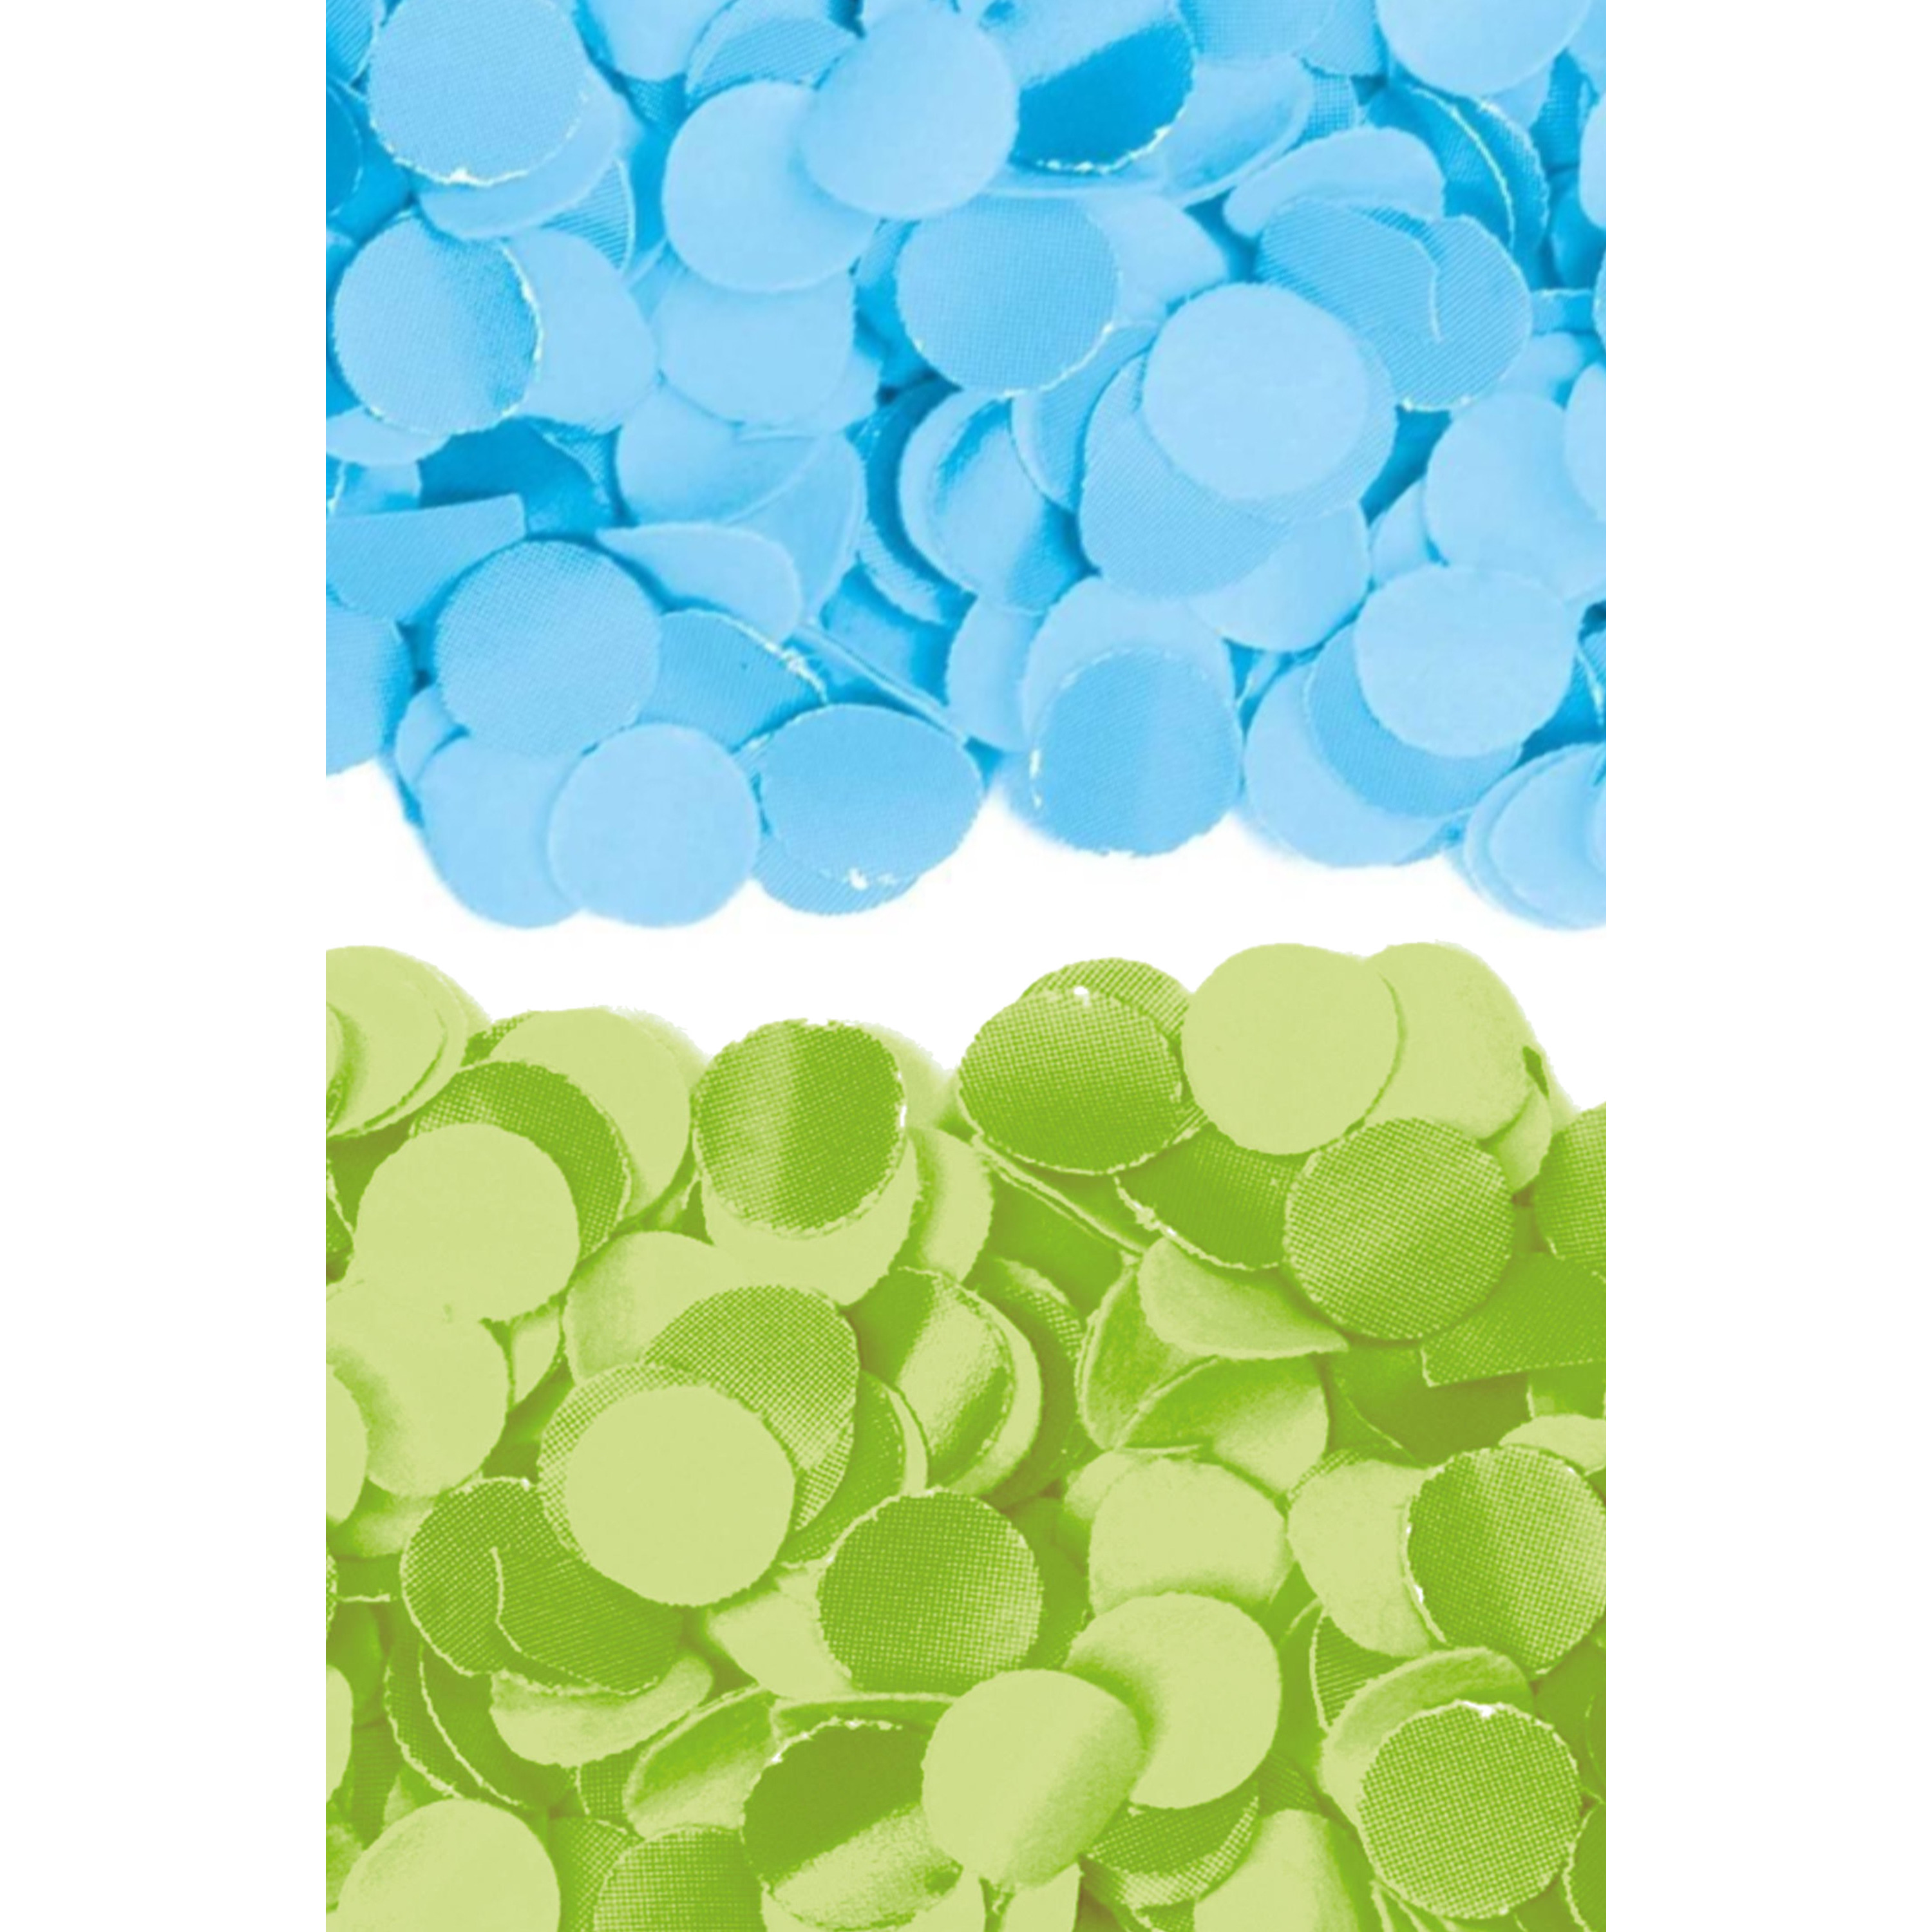 600 gram groen en blauwe papier snippers confetti mix set feest versiering -